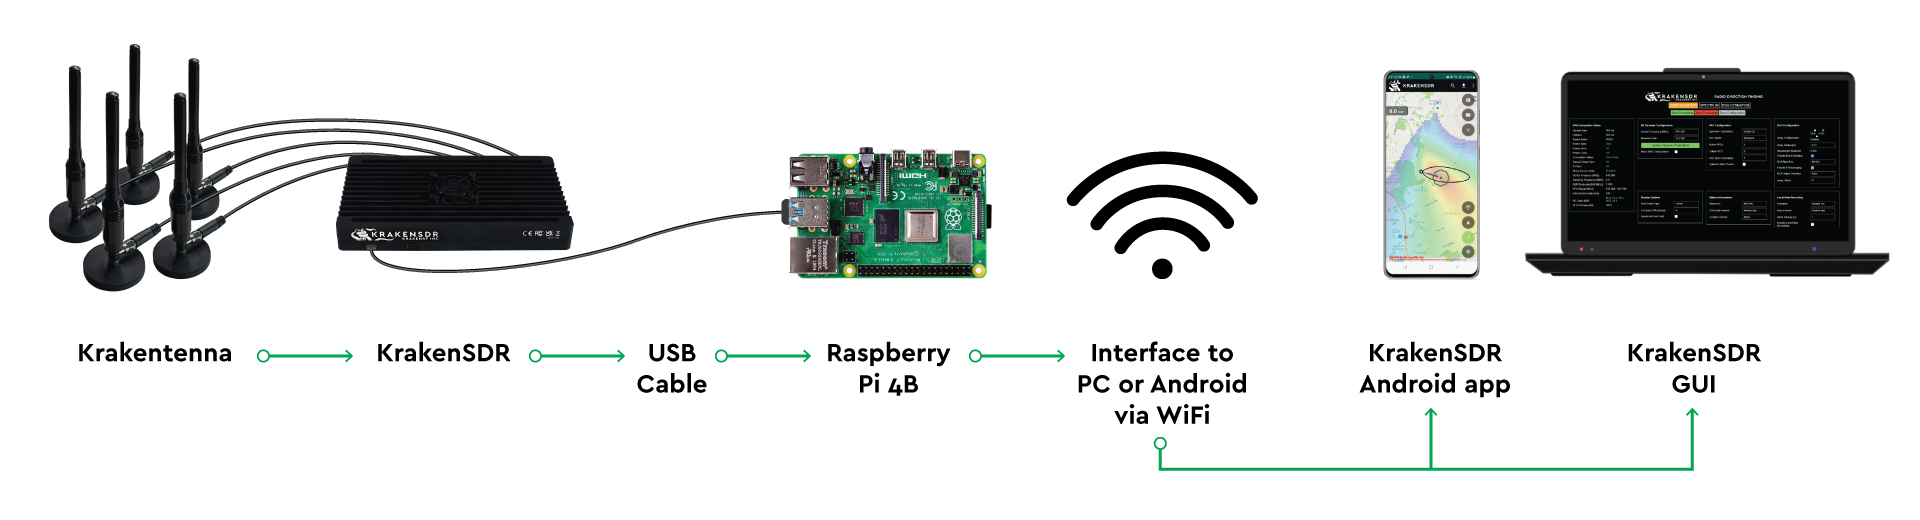 Sdr android. SDR радиоприемник для андроид. Krakensdr пеленгатор. Pluto SDR PC И foto.